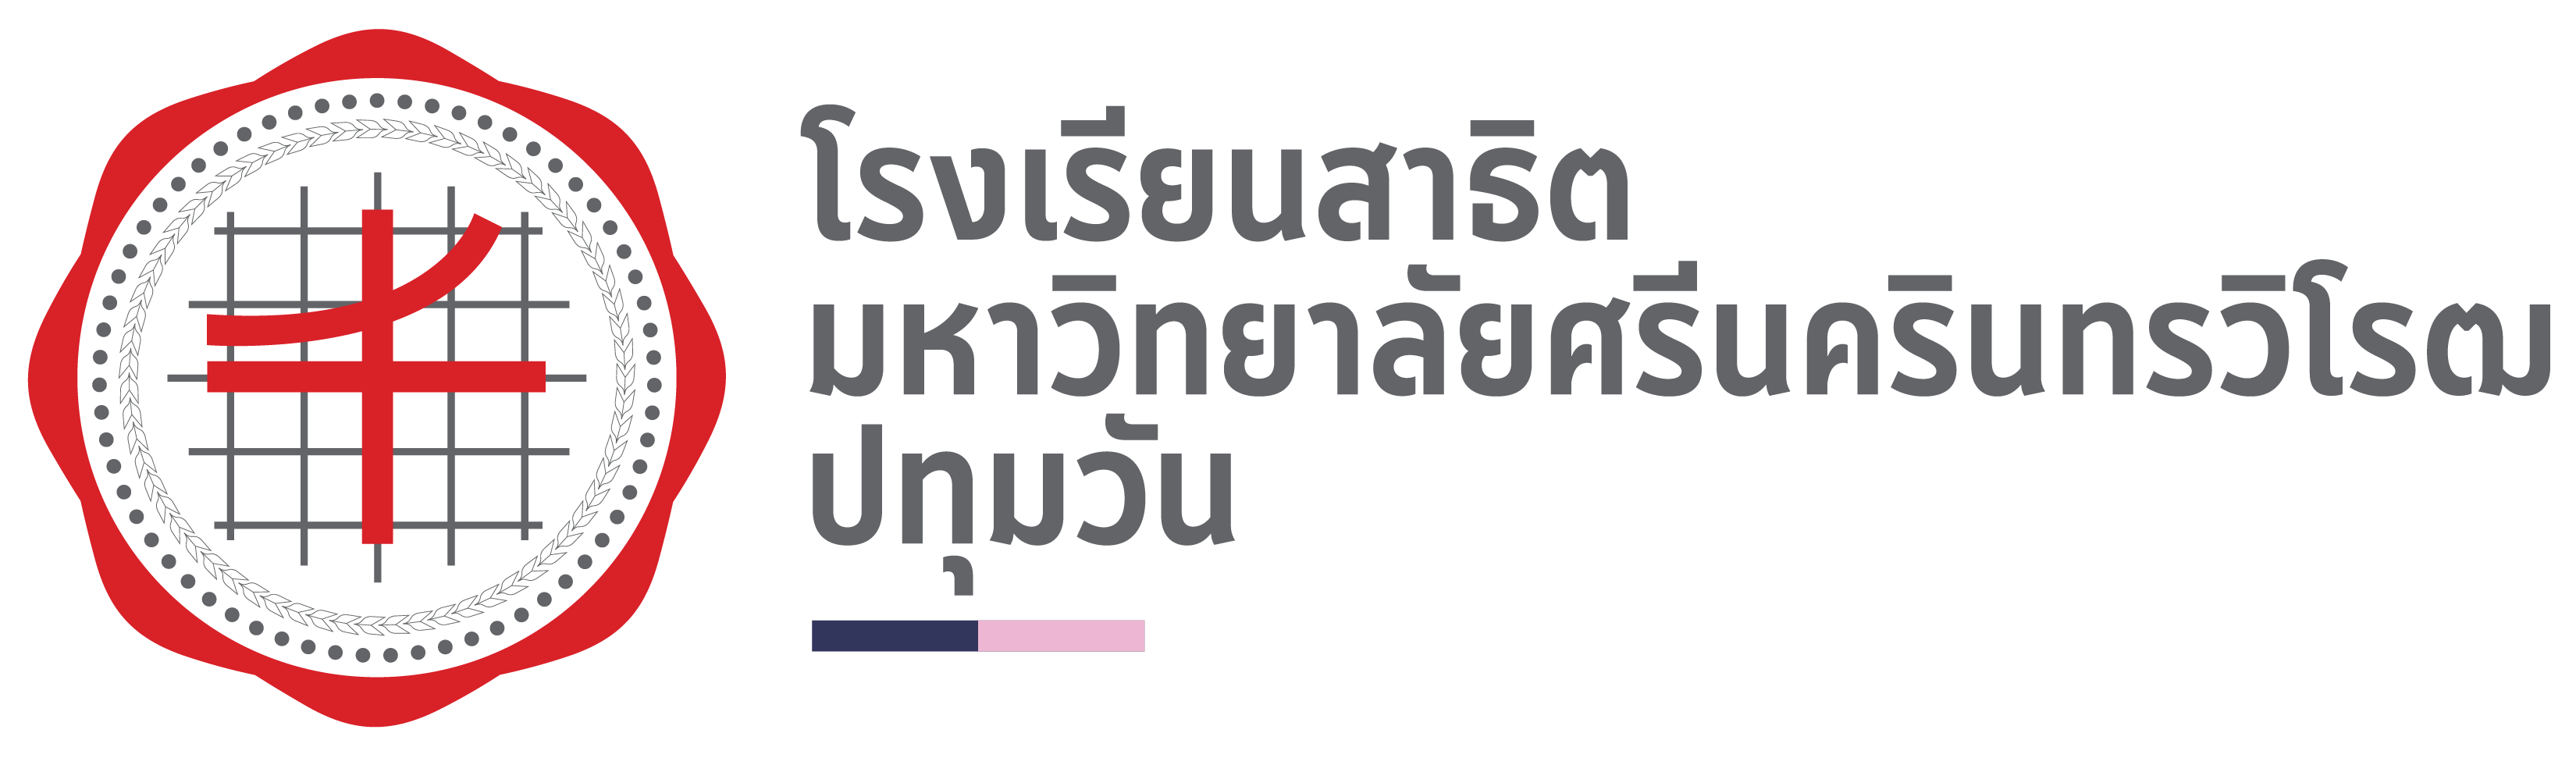 pds_logo_thai